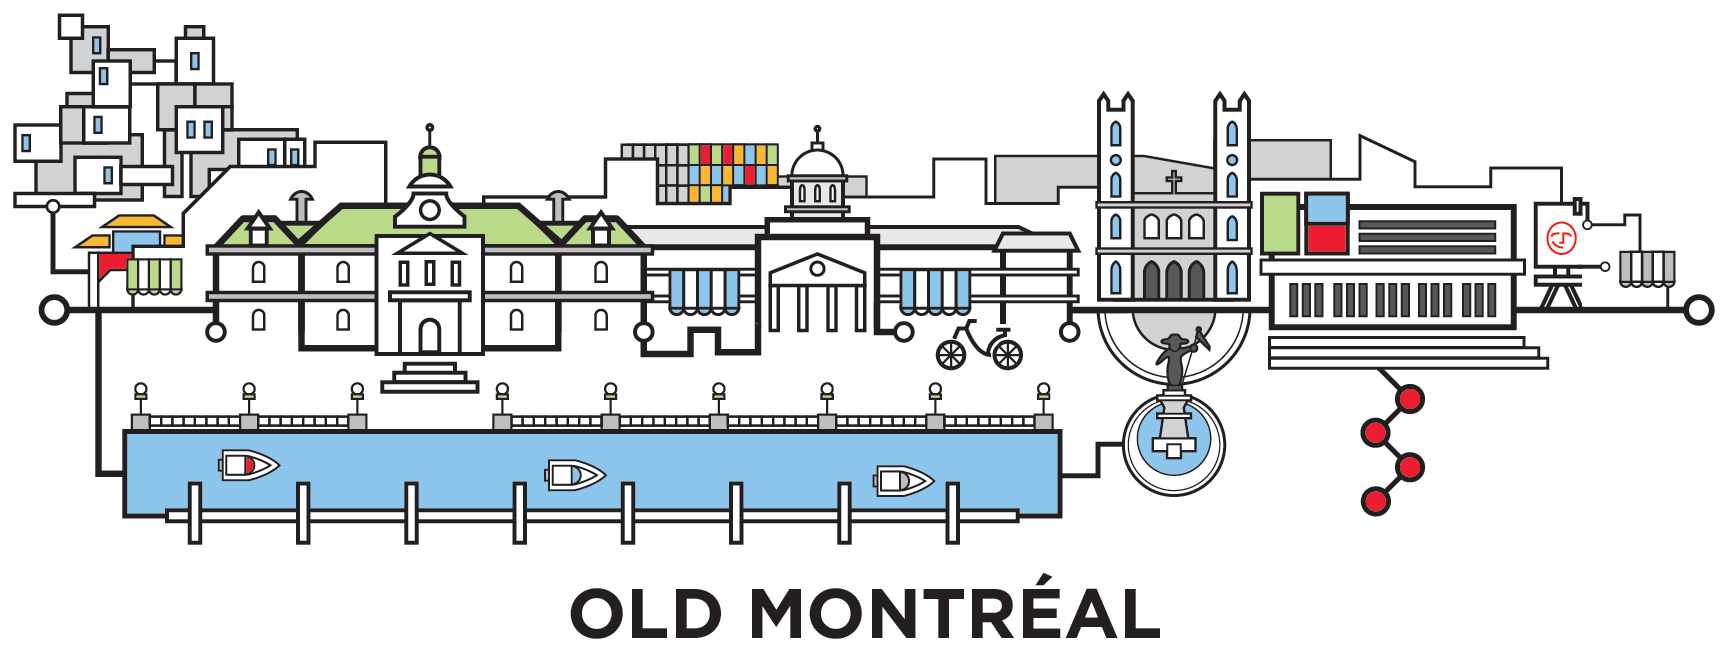 old-montreal-cityline-illustration-by-loogart